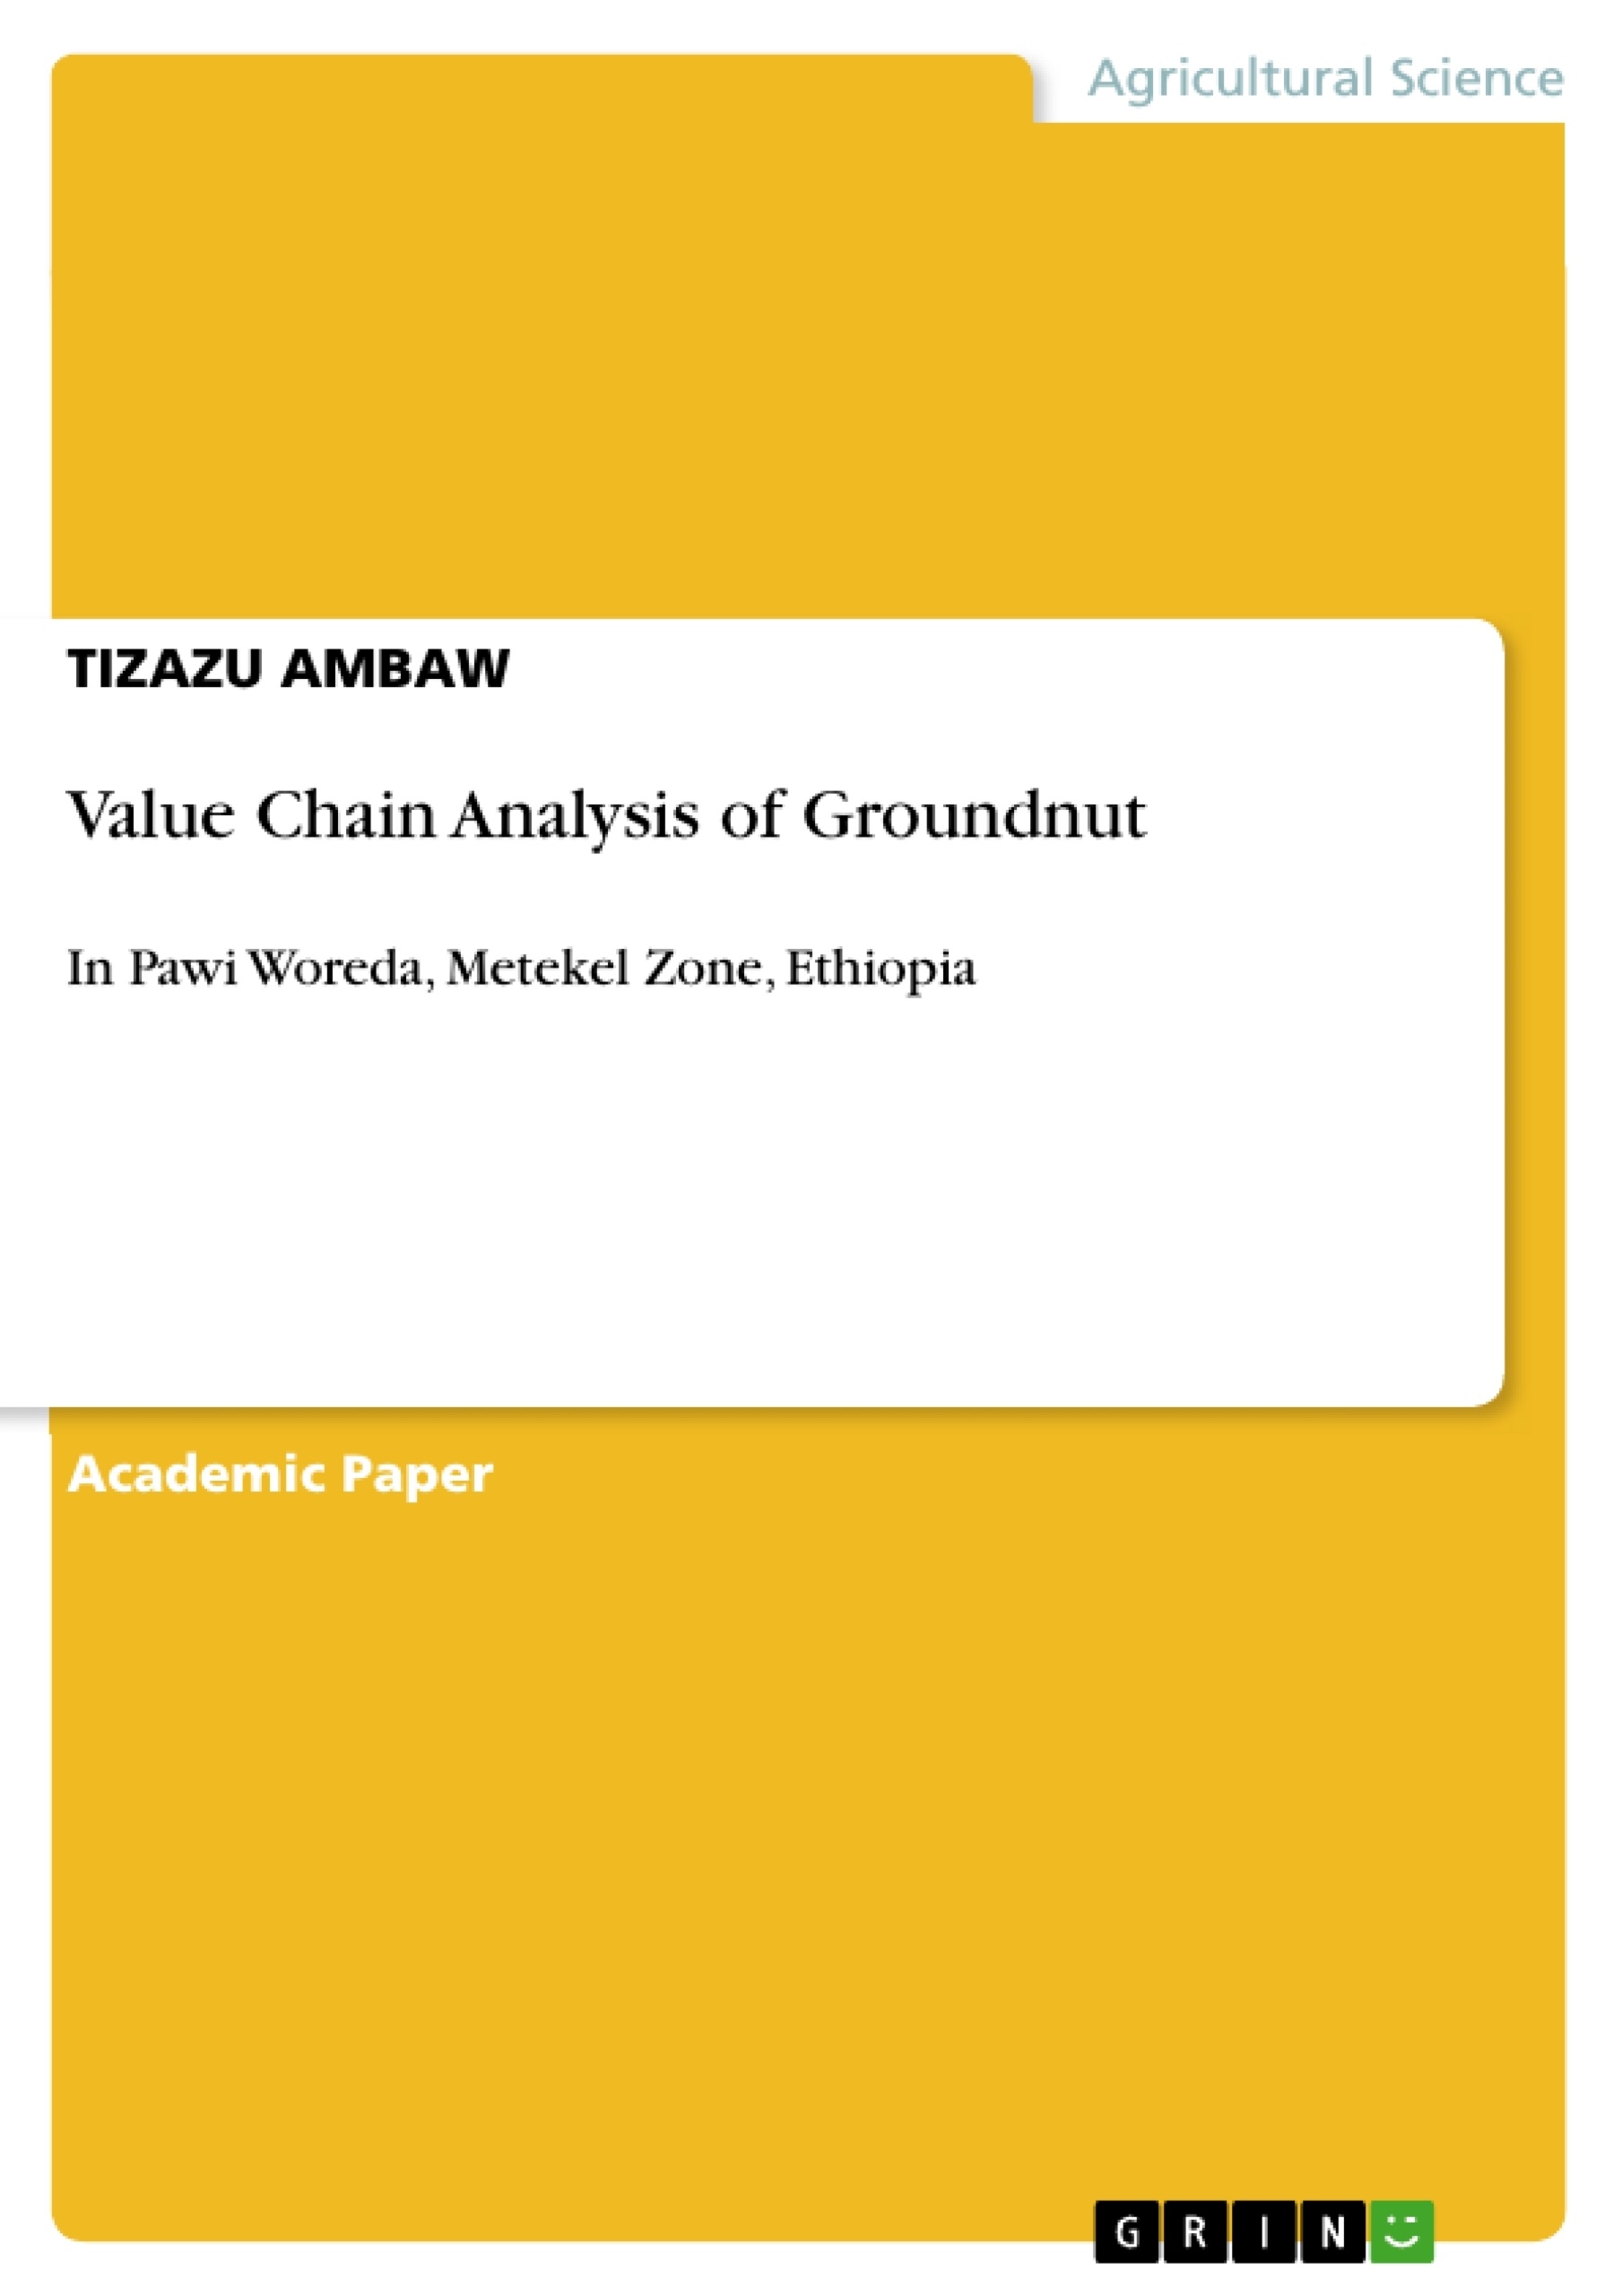 Titel: Value Chain Analysis of Groundnut